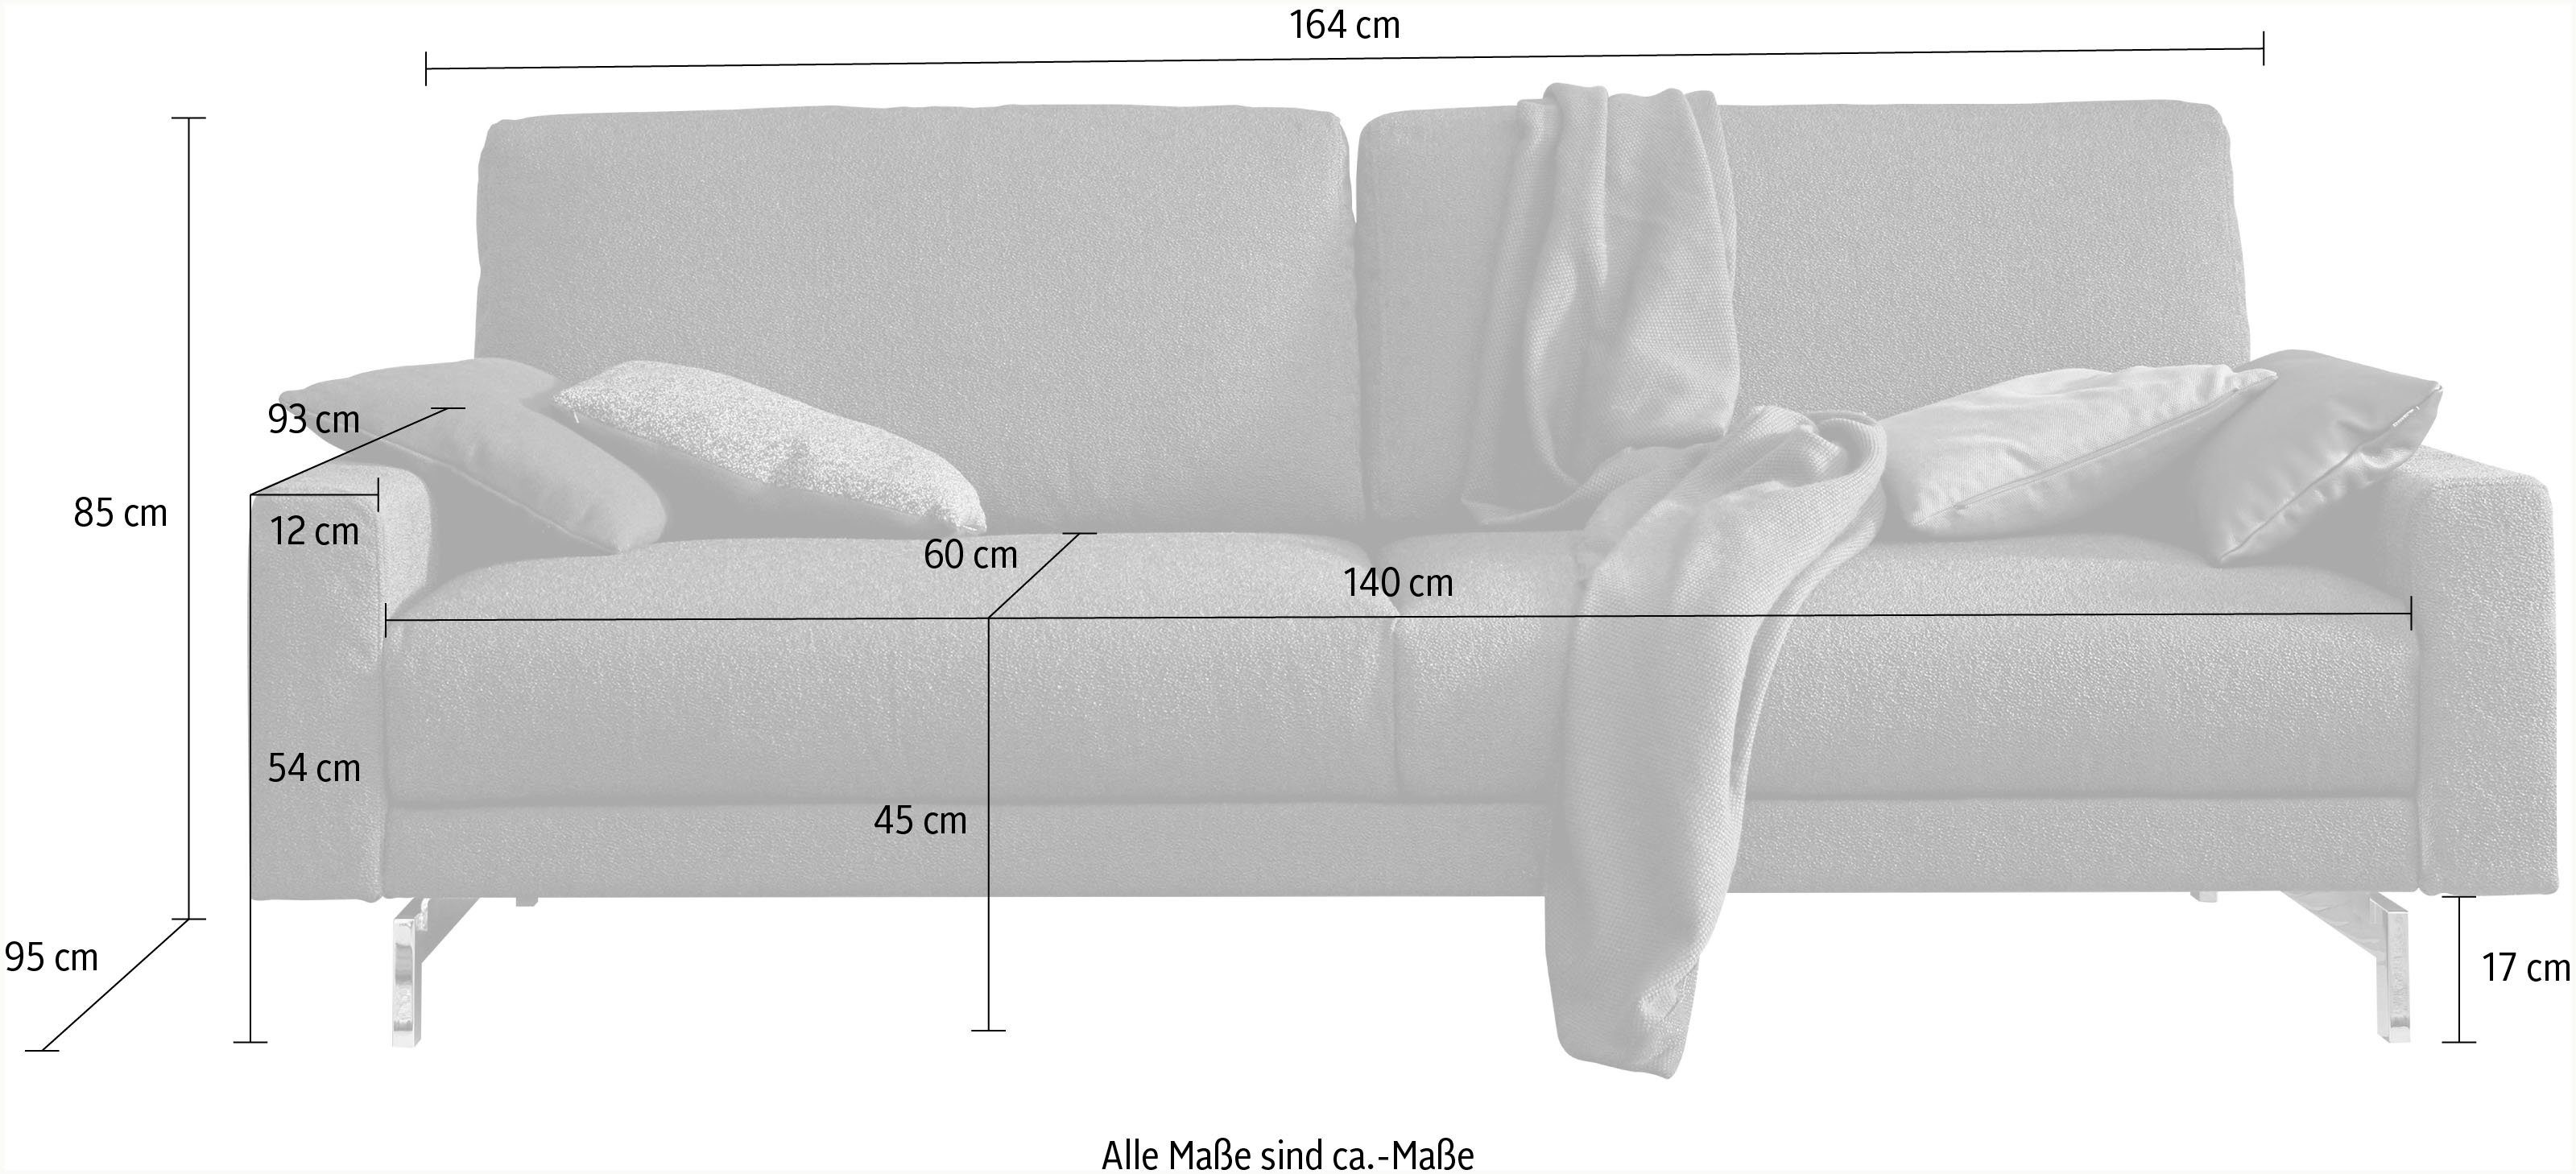 hs.450, Armlehne cm 2-Sitzer Breite chromfarben Fuß sofa glänzend, hülsta niedrig, 164